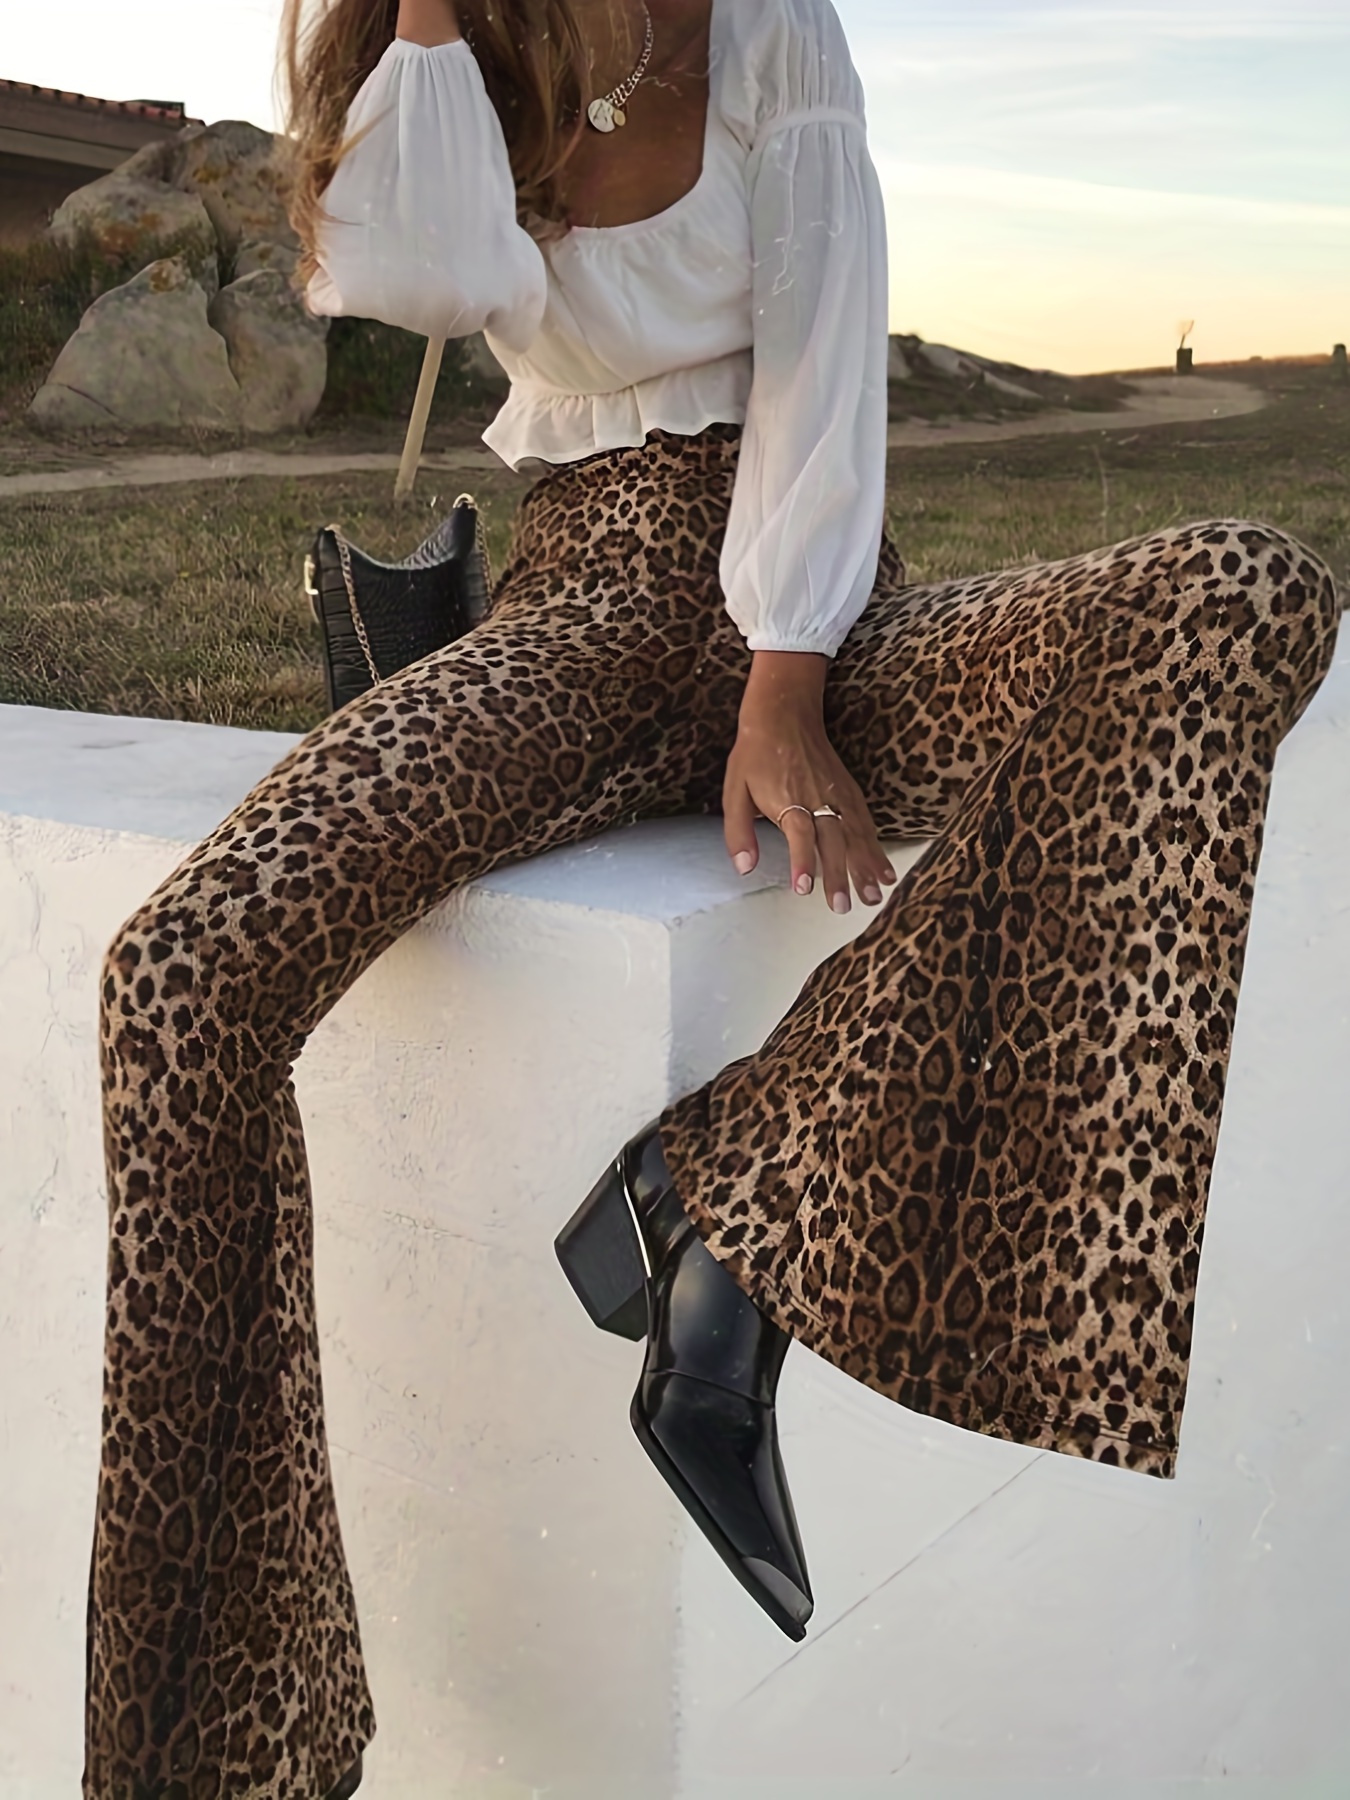 classy leopard print pants outfit